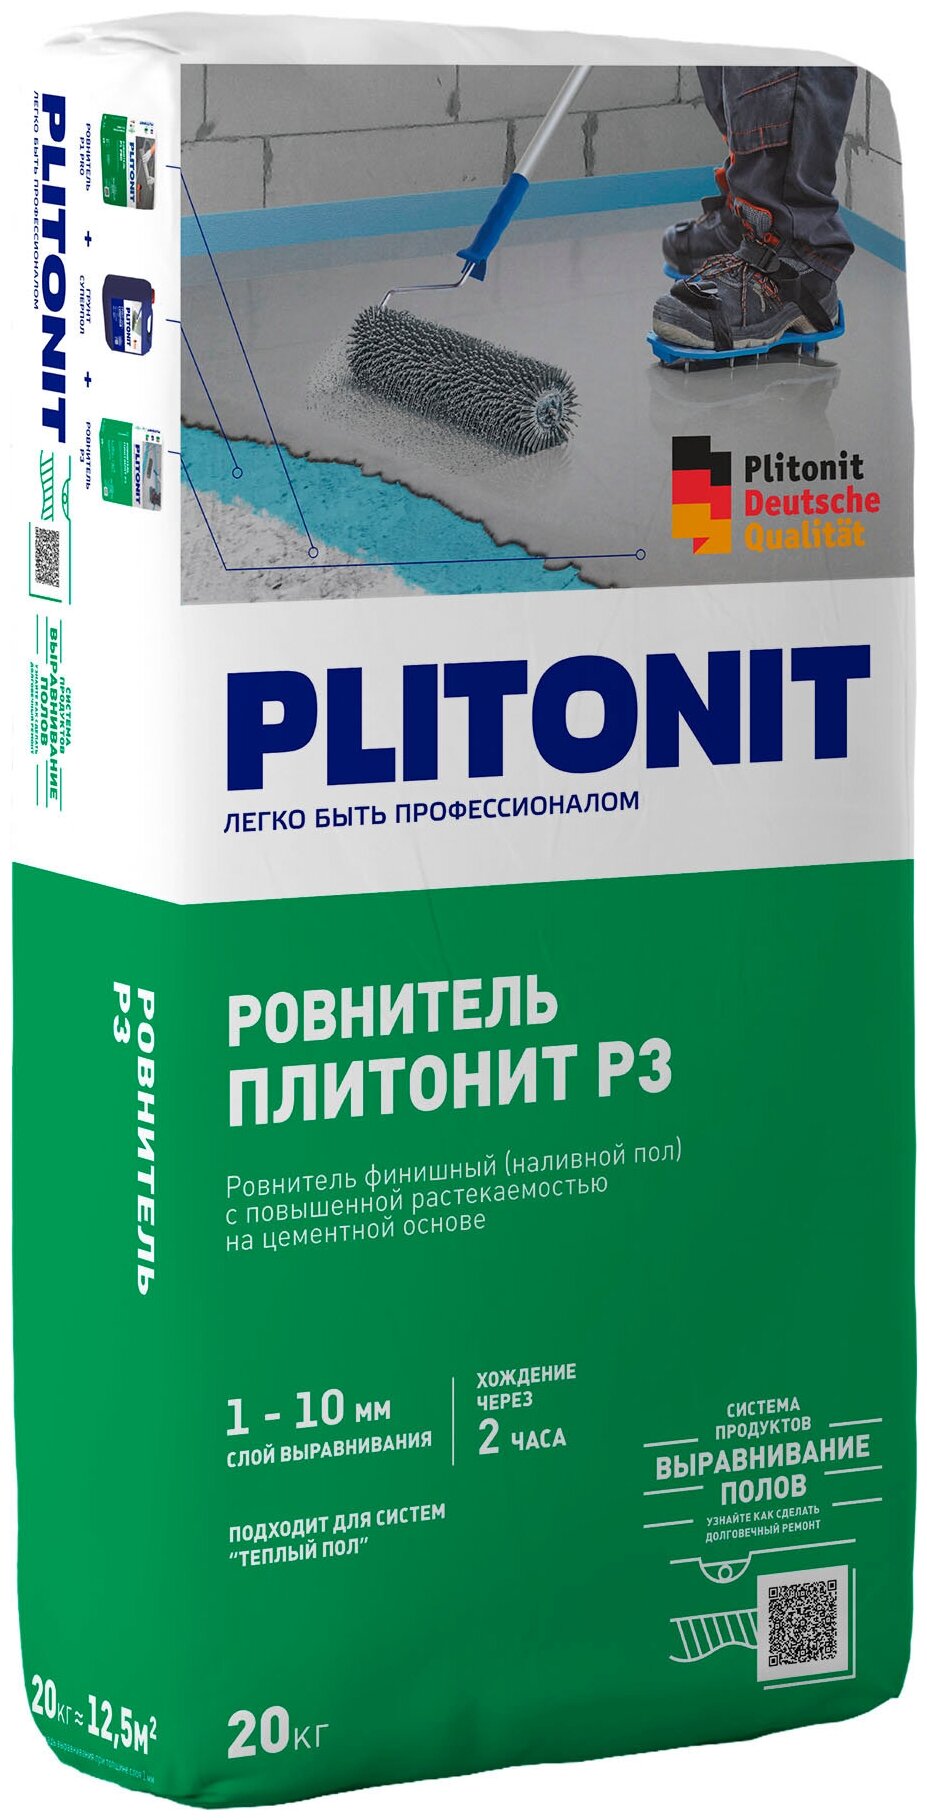 Выравнивающие смеси Плитонит - фото №2